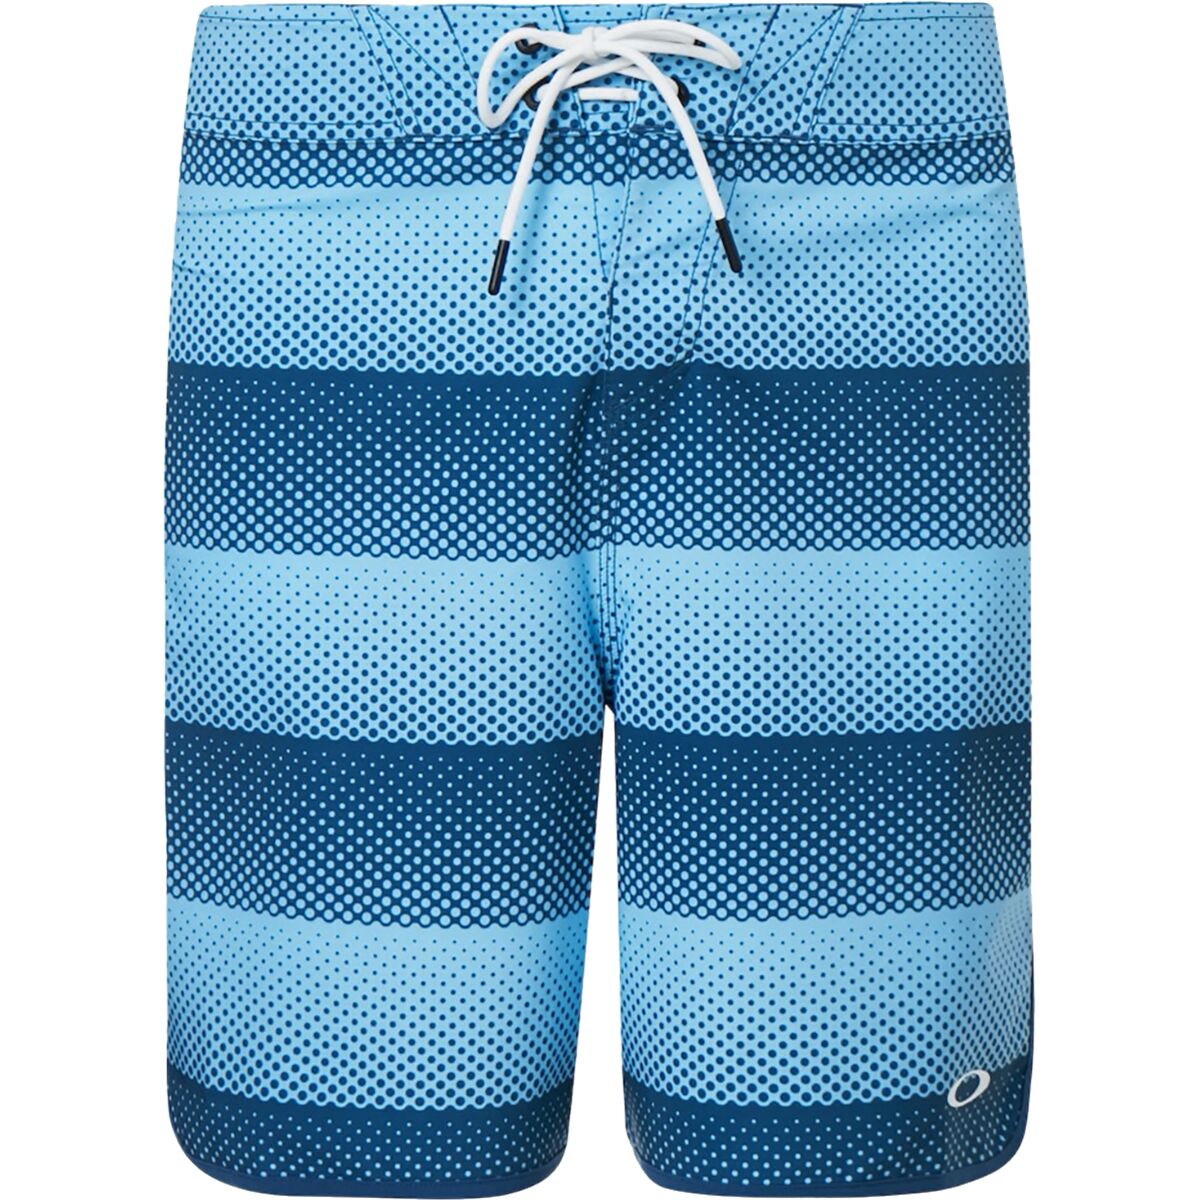 Oakley Dot Stripes 19in Boardshort - Men's Dot Stripes Blue 30